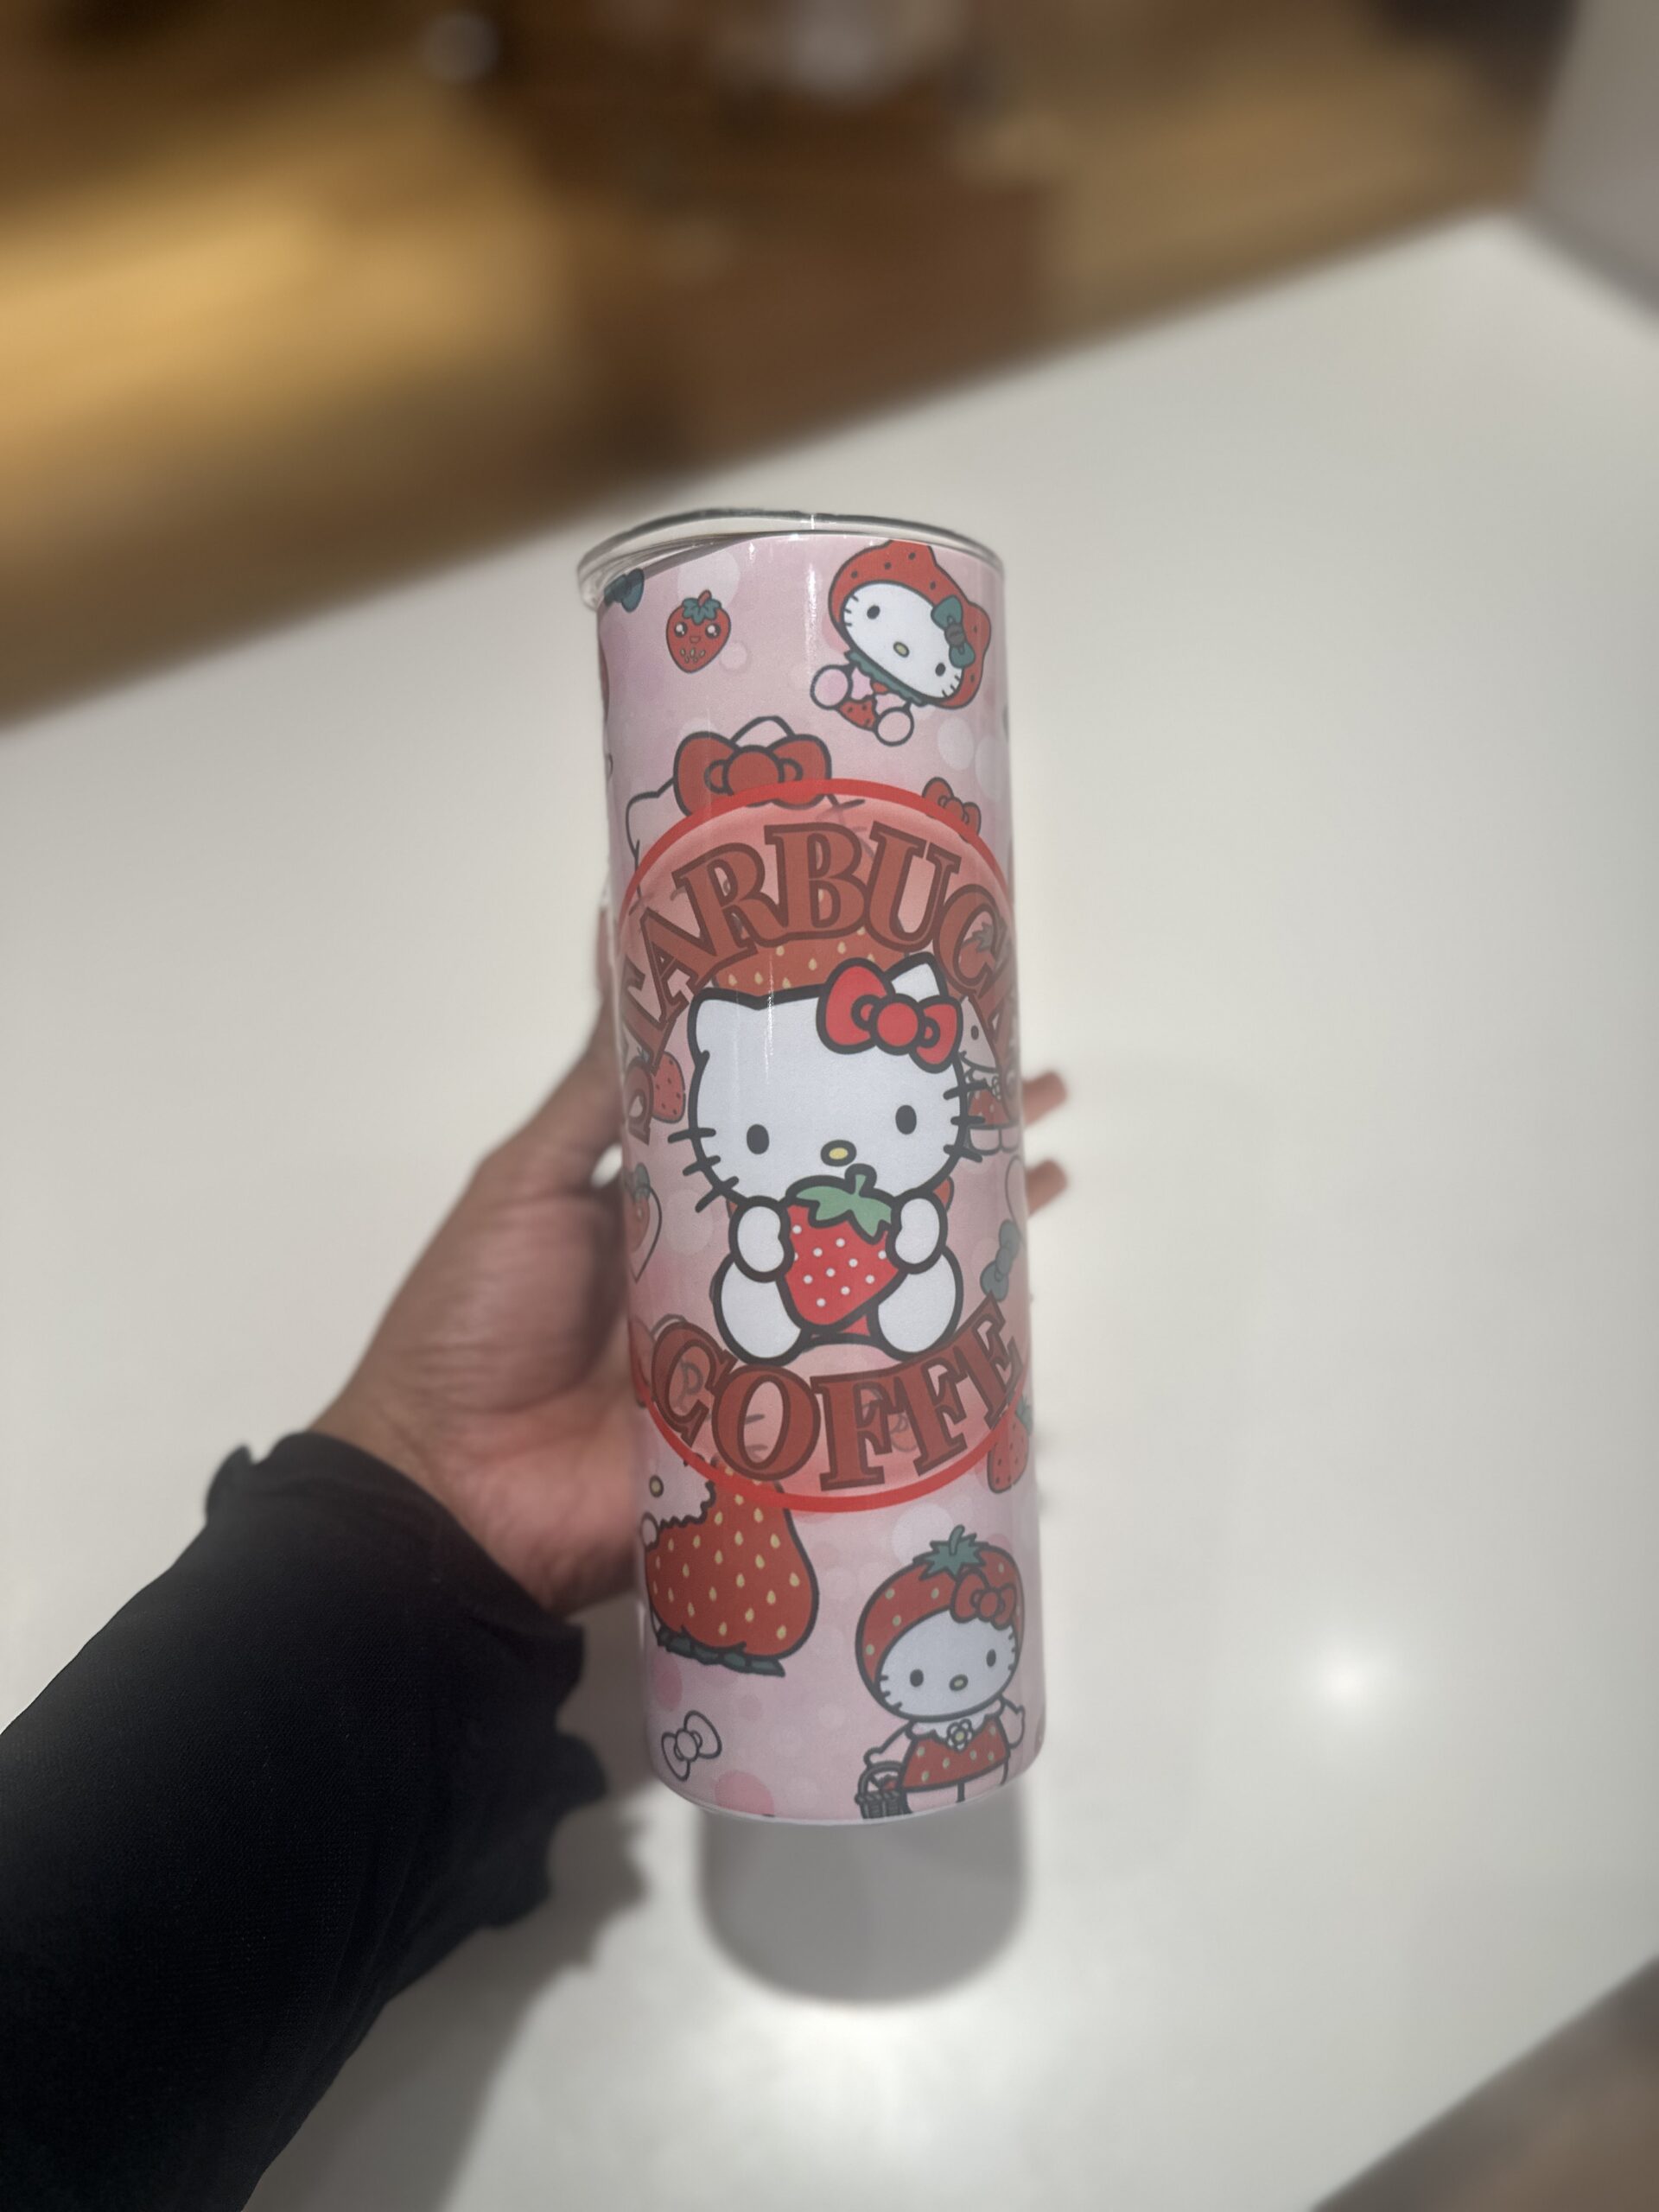 Hello Kitty Tumbler Cup